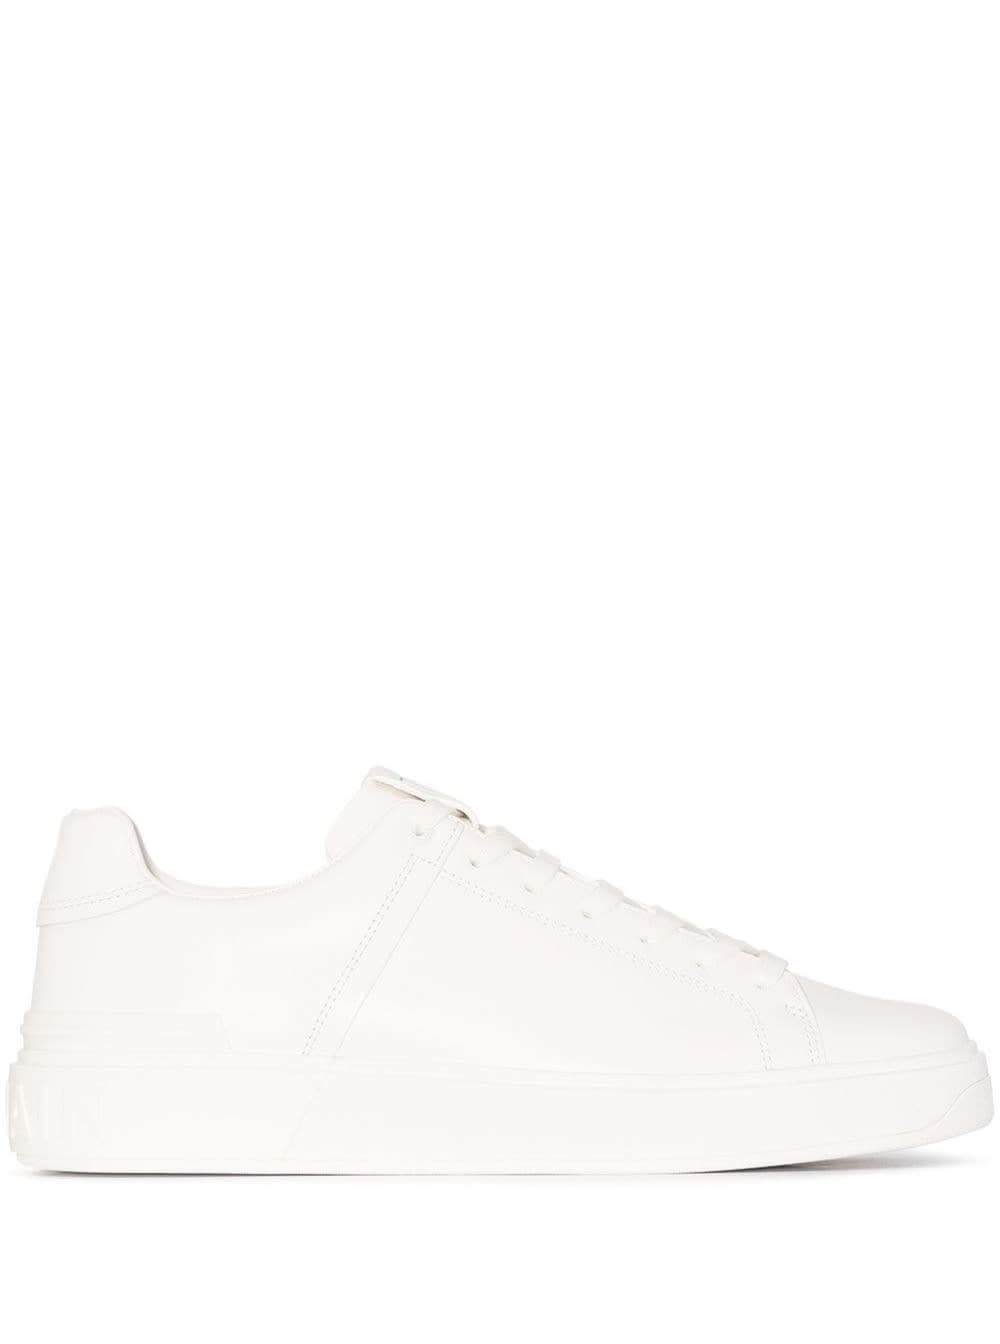 Balmain White Leather Sneakers With Logo